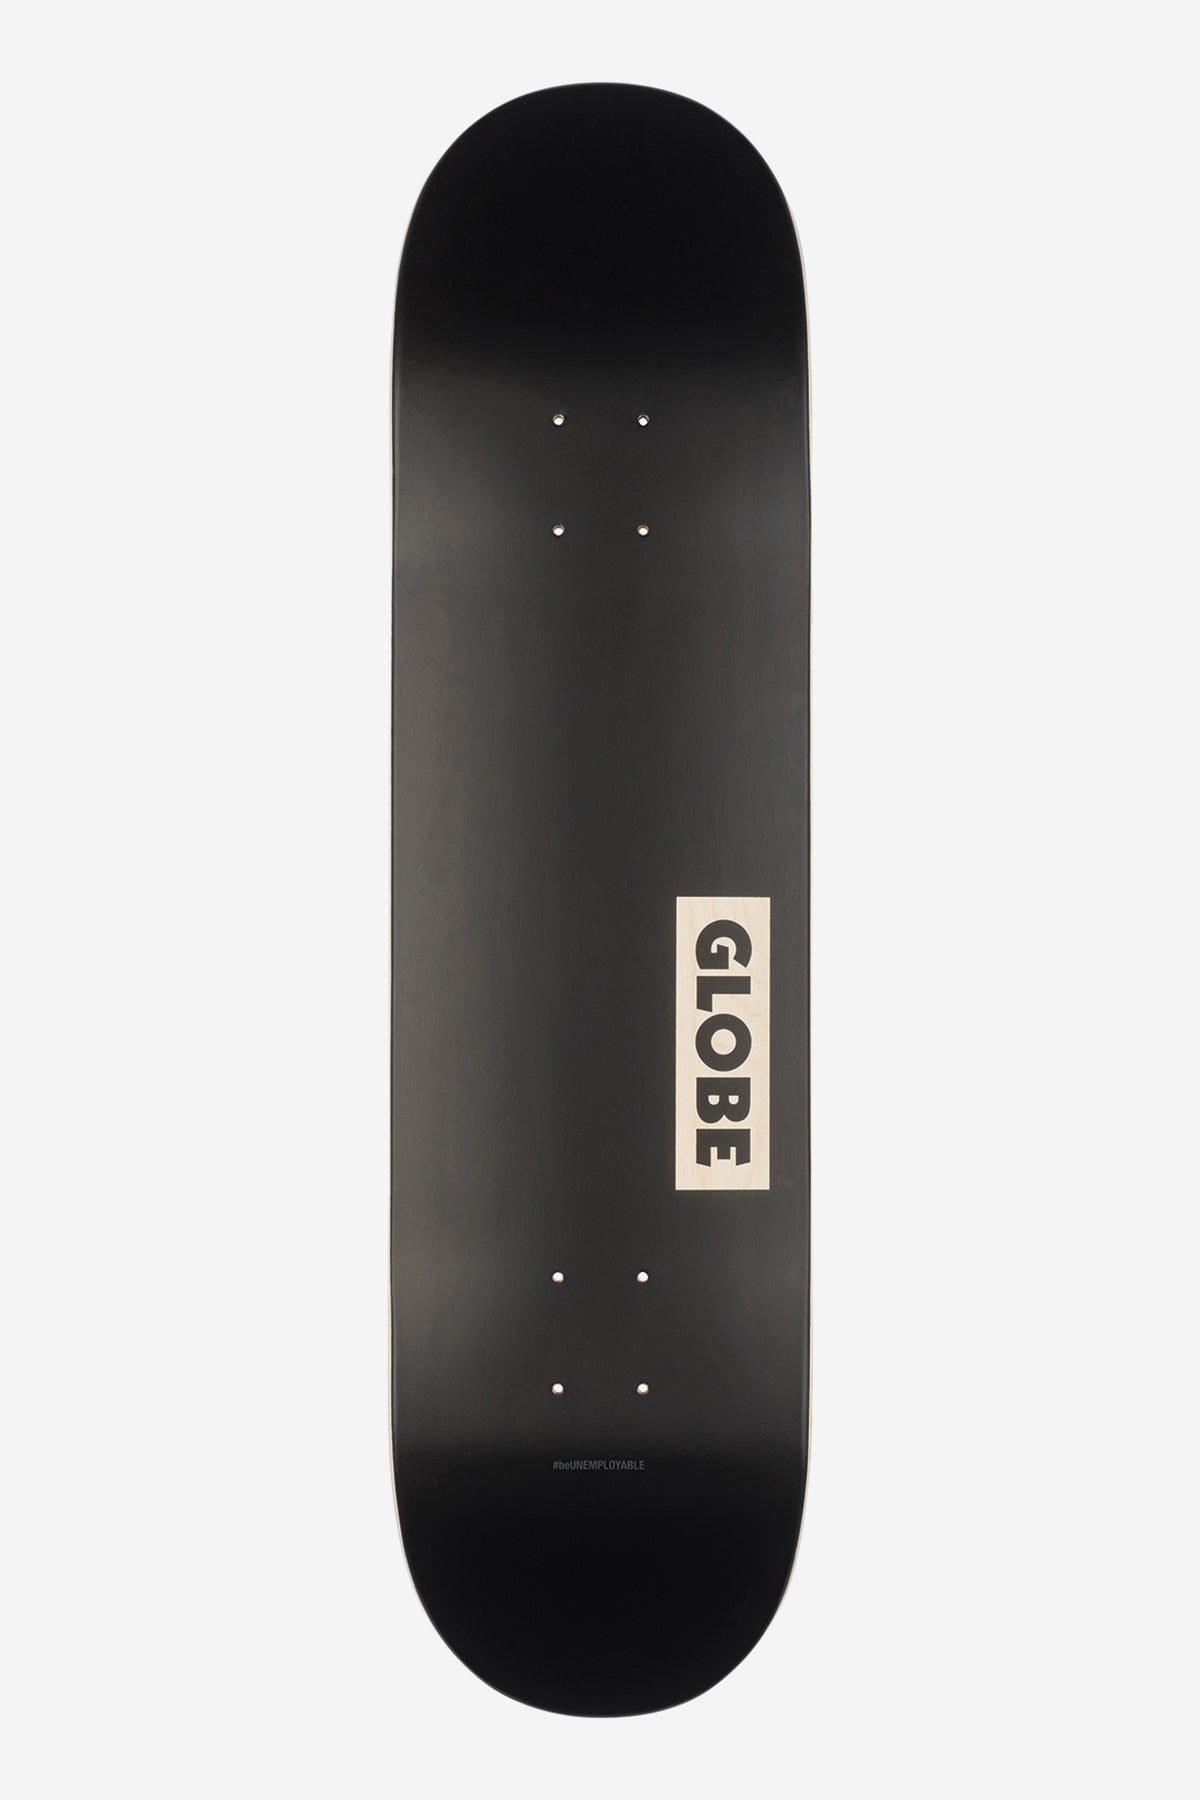 Goodstock - Black - 8.125" Skateboard Deck